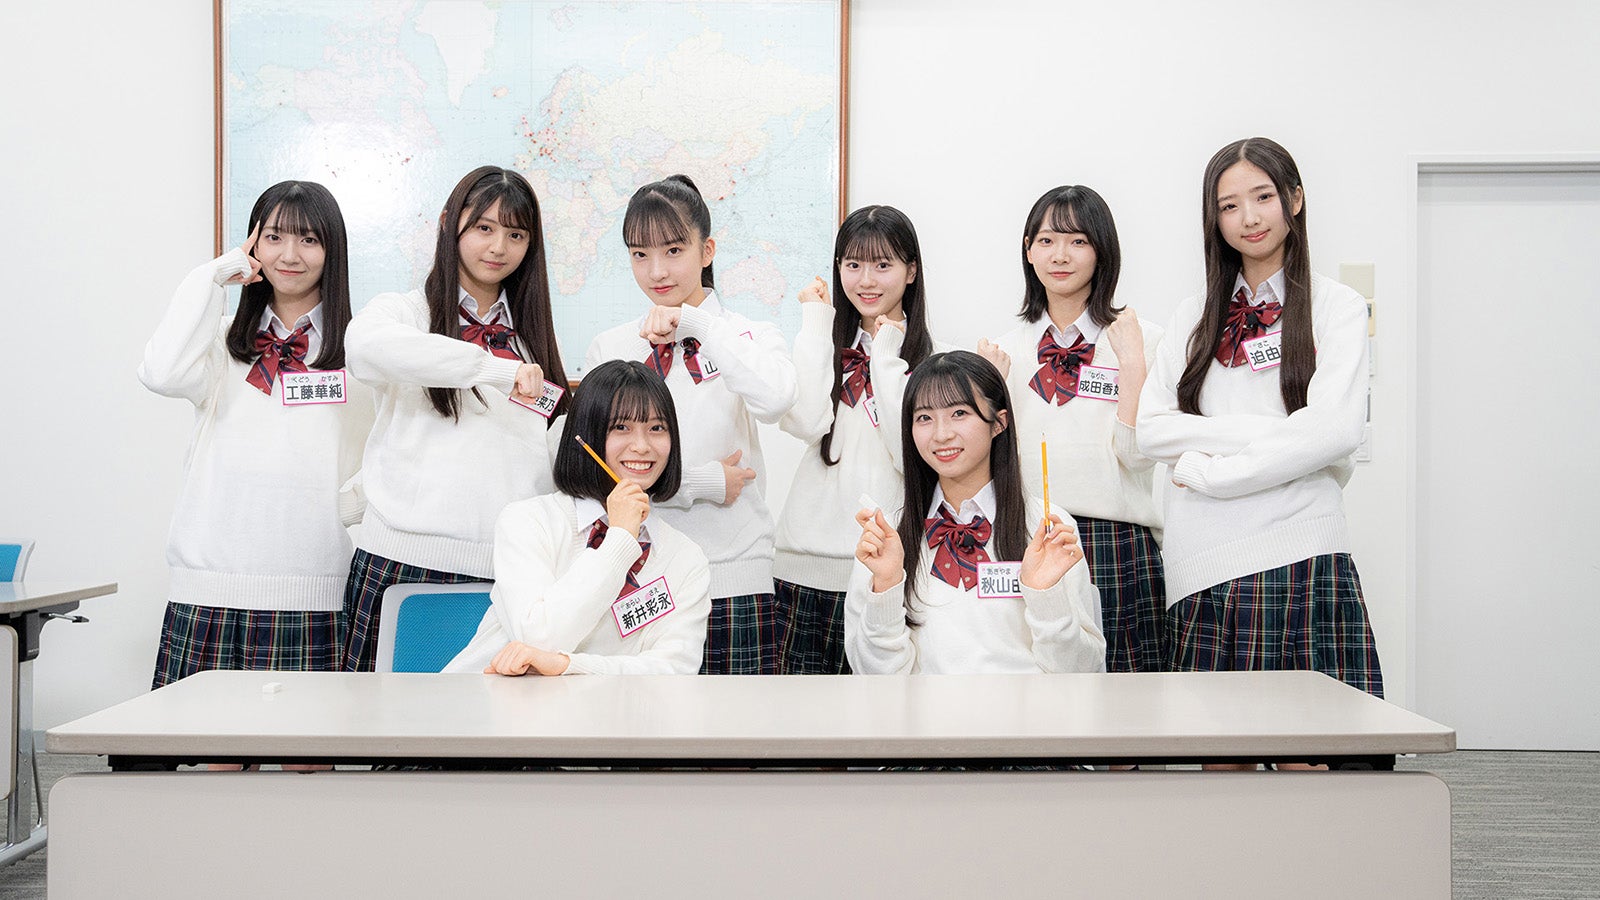 AKB48冠番組「AKB48 ネ申テレビ」シーズン42、テレビ初放送決定 18期生がIQテストに悪戦苦闘 - モデルプレス